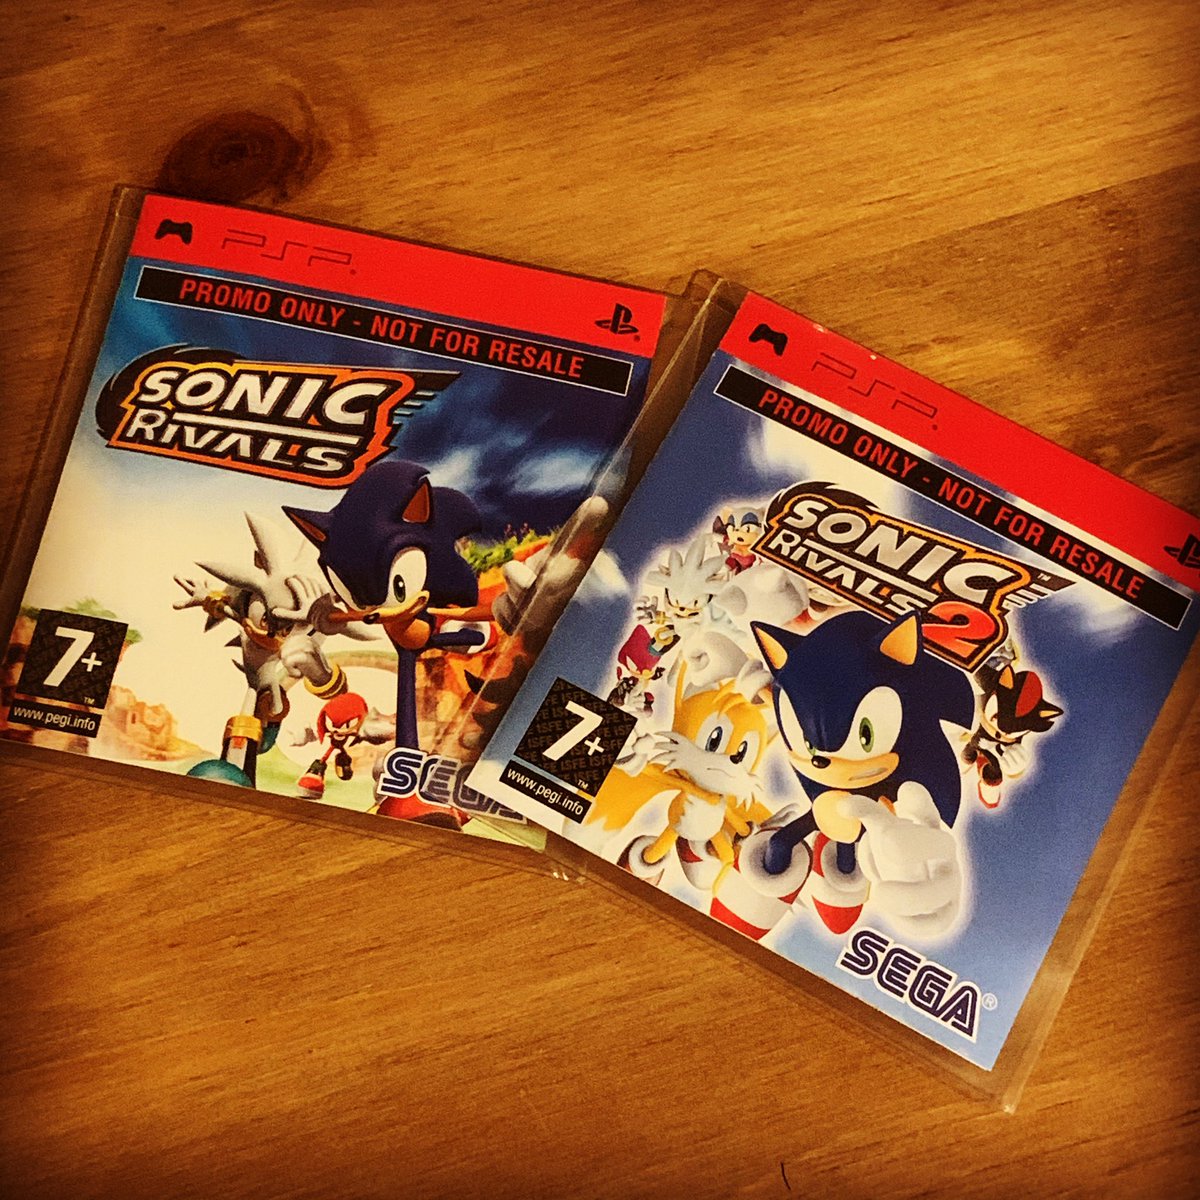 Sonic Rivals ROM & ISO - PSP Game